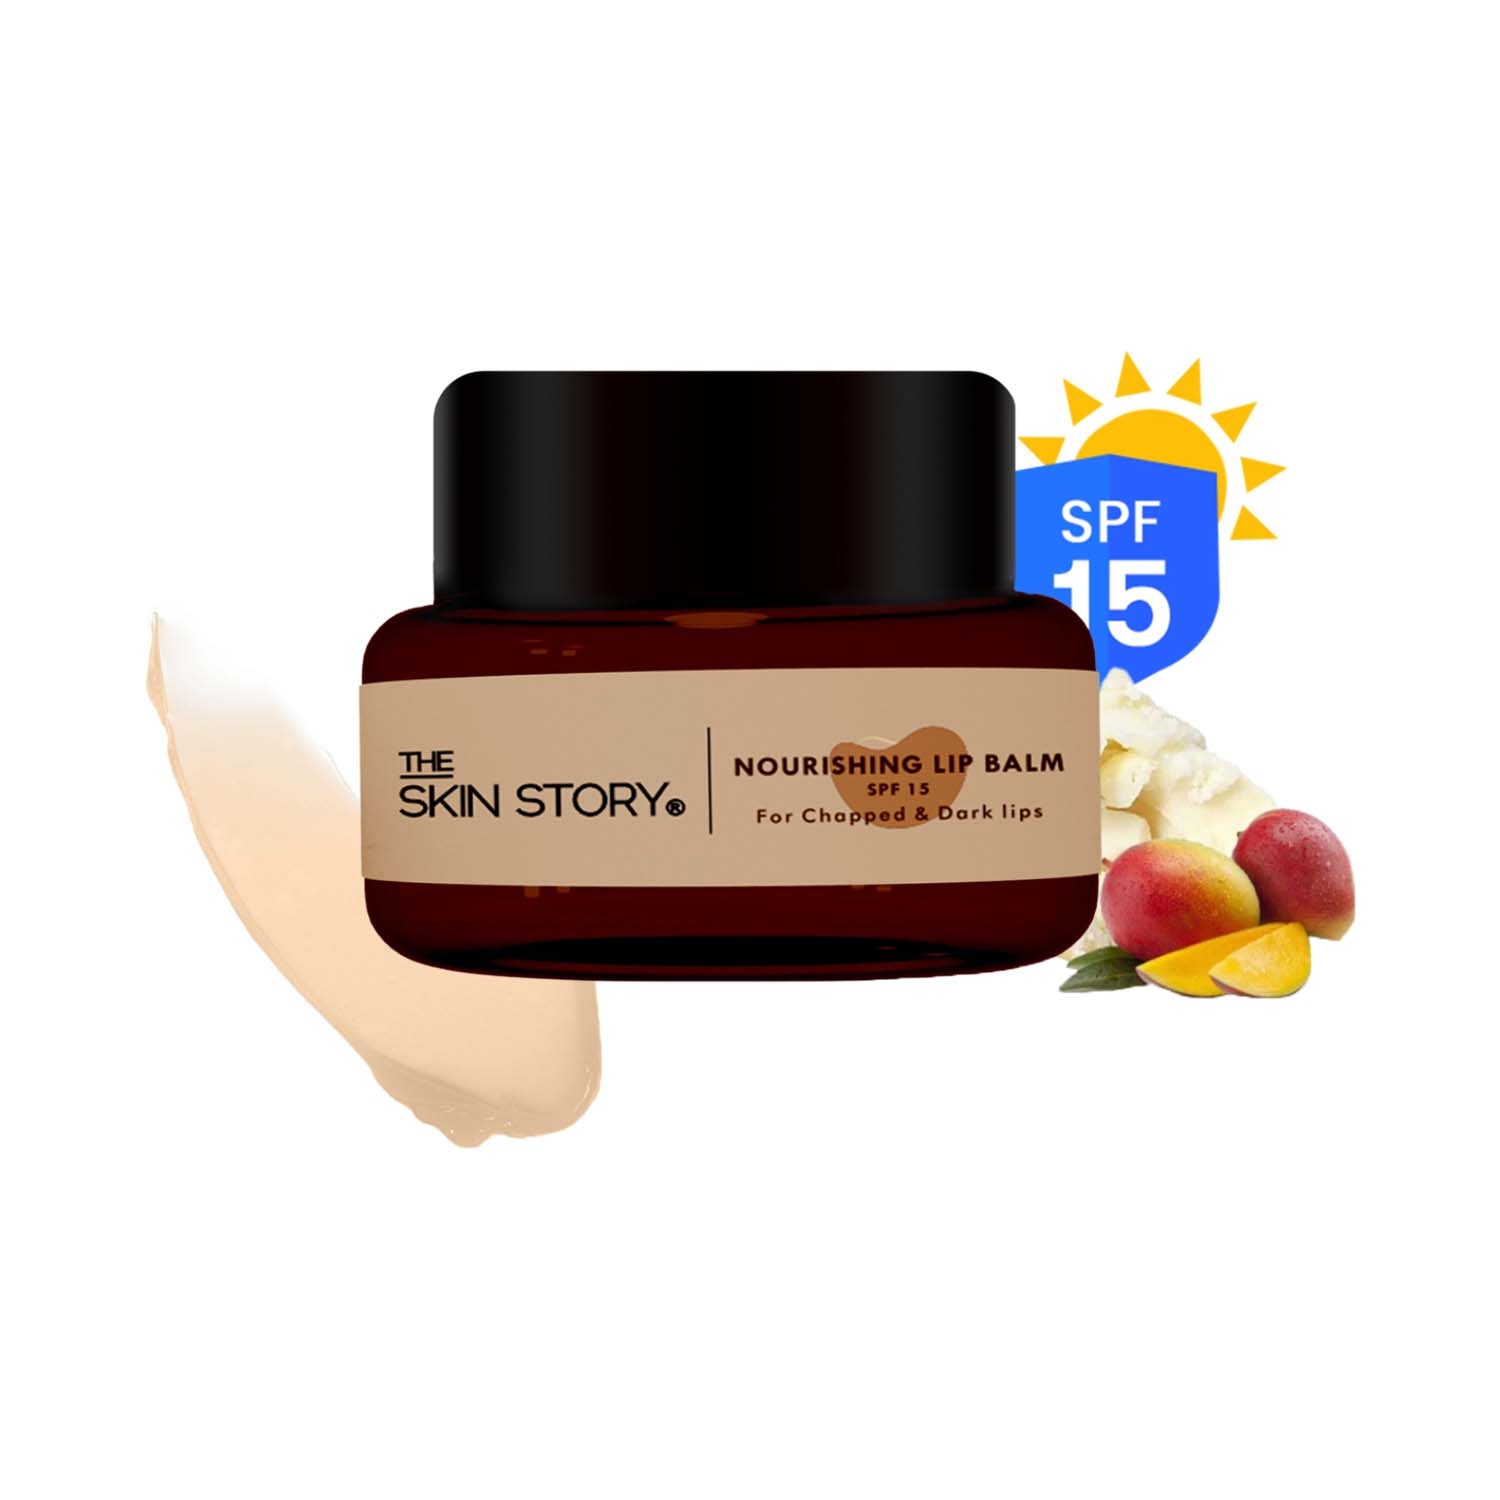 The Skin Story Nourishing Lip Balm SPF 15 (25g)